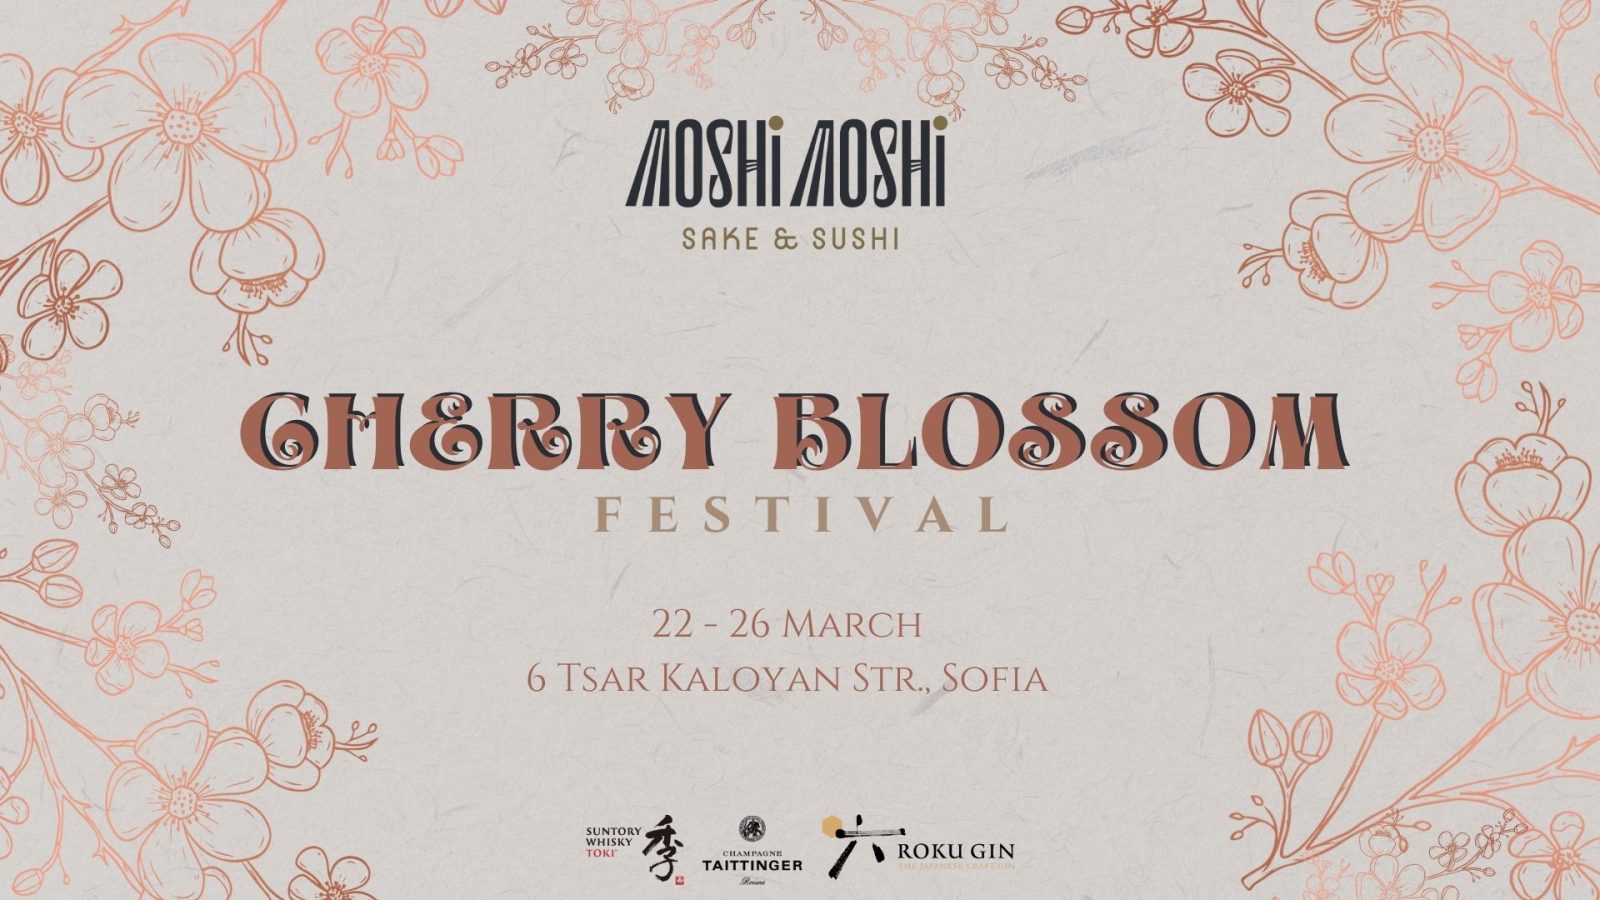 Moshi Moshi festival